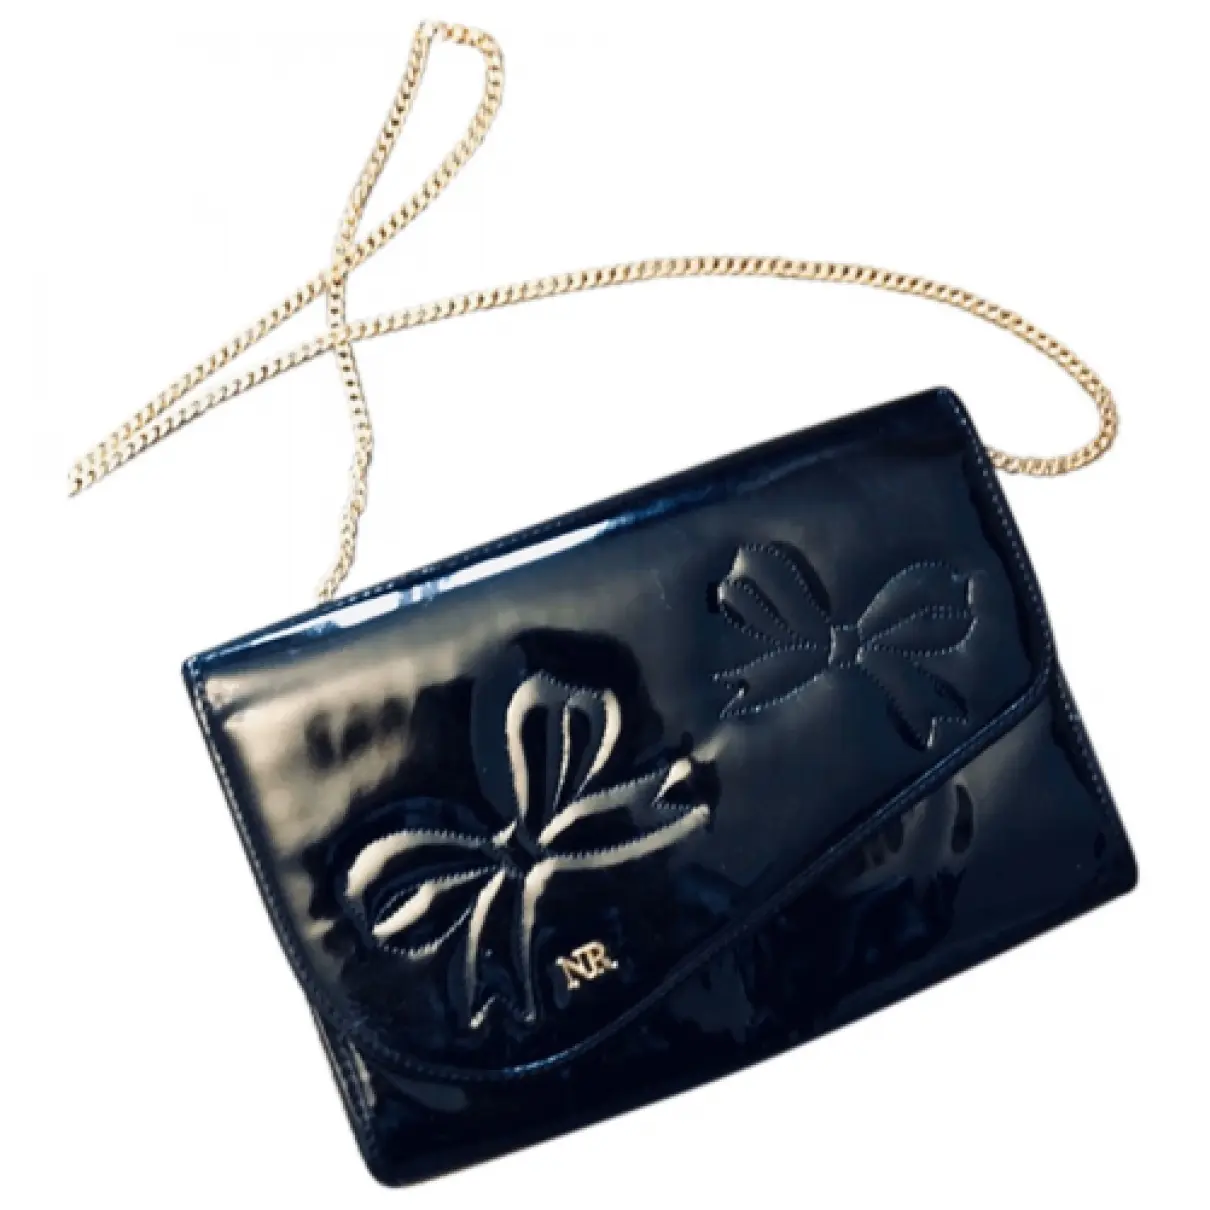 Patent leather handbag Nina Ricci